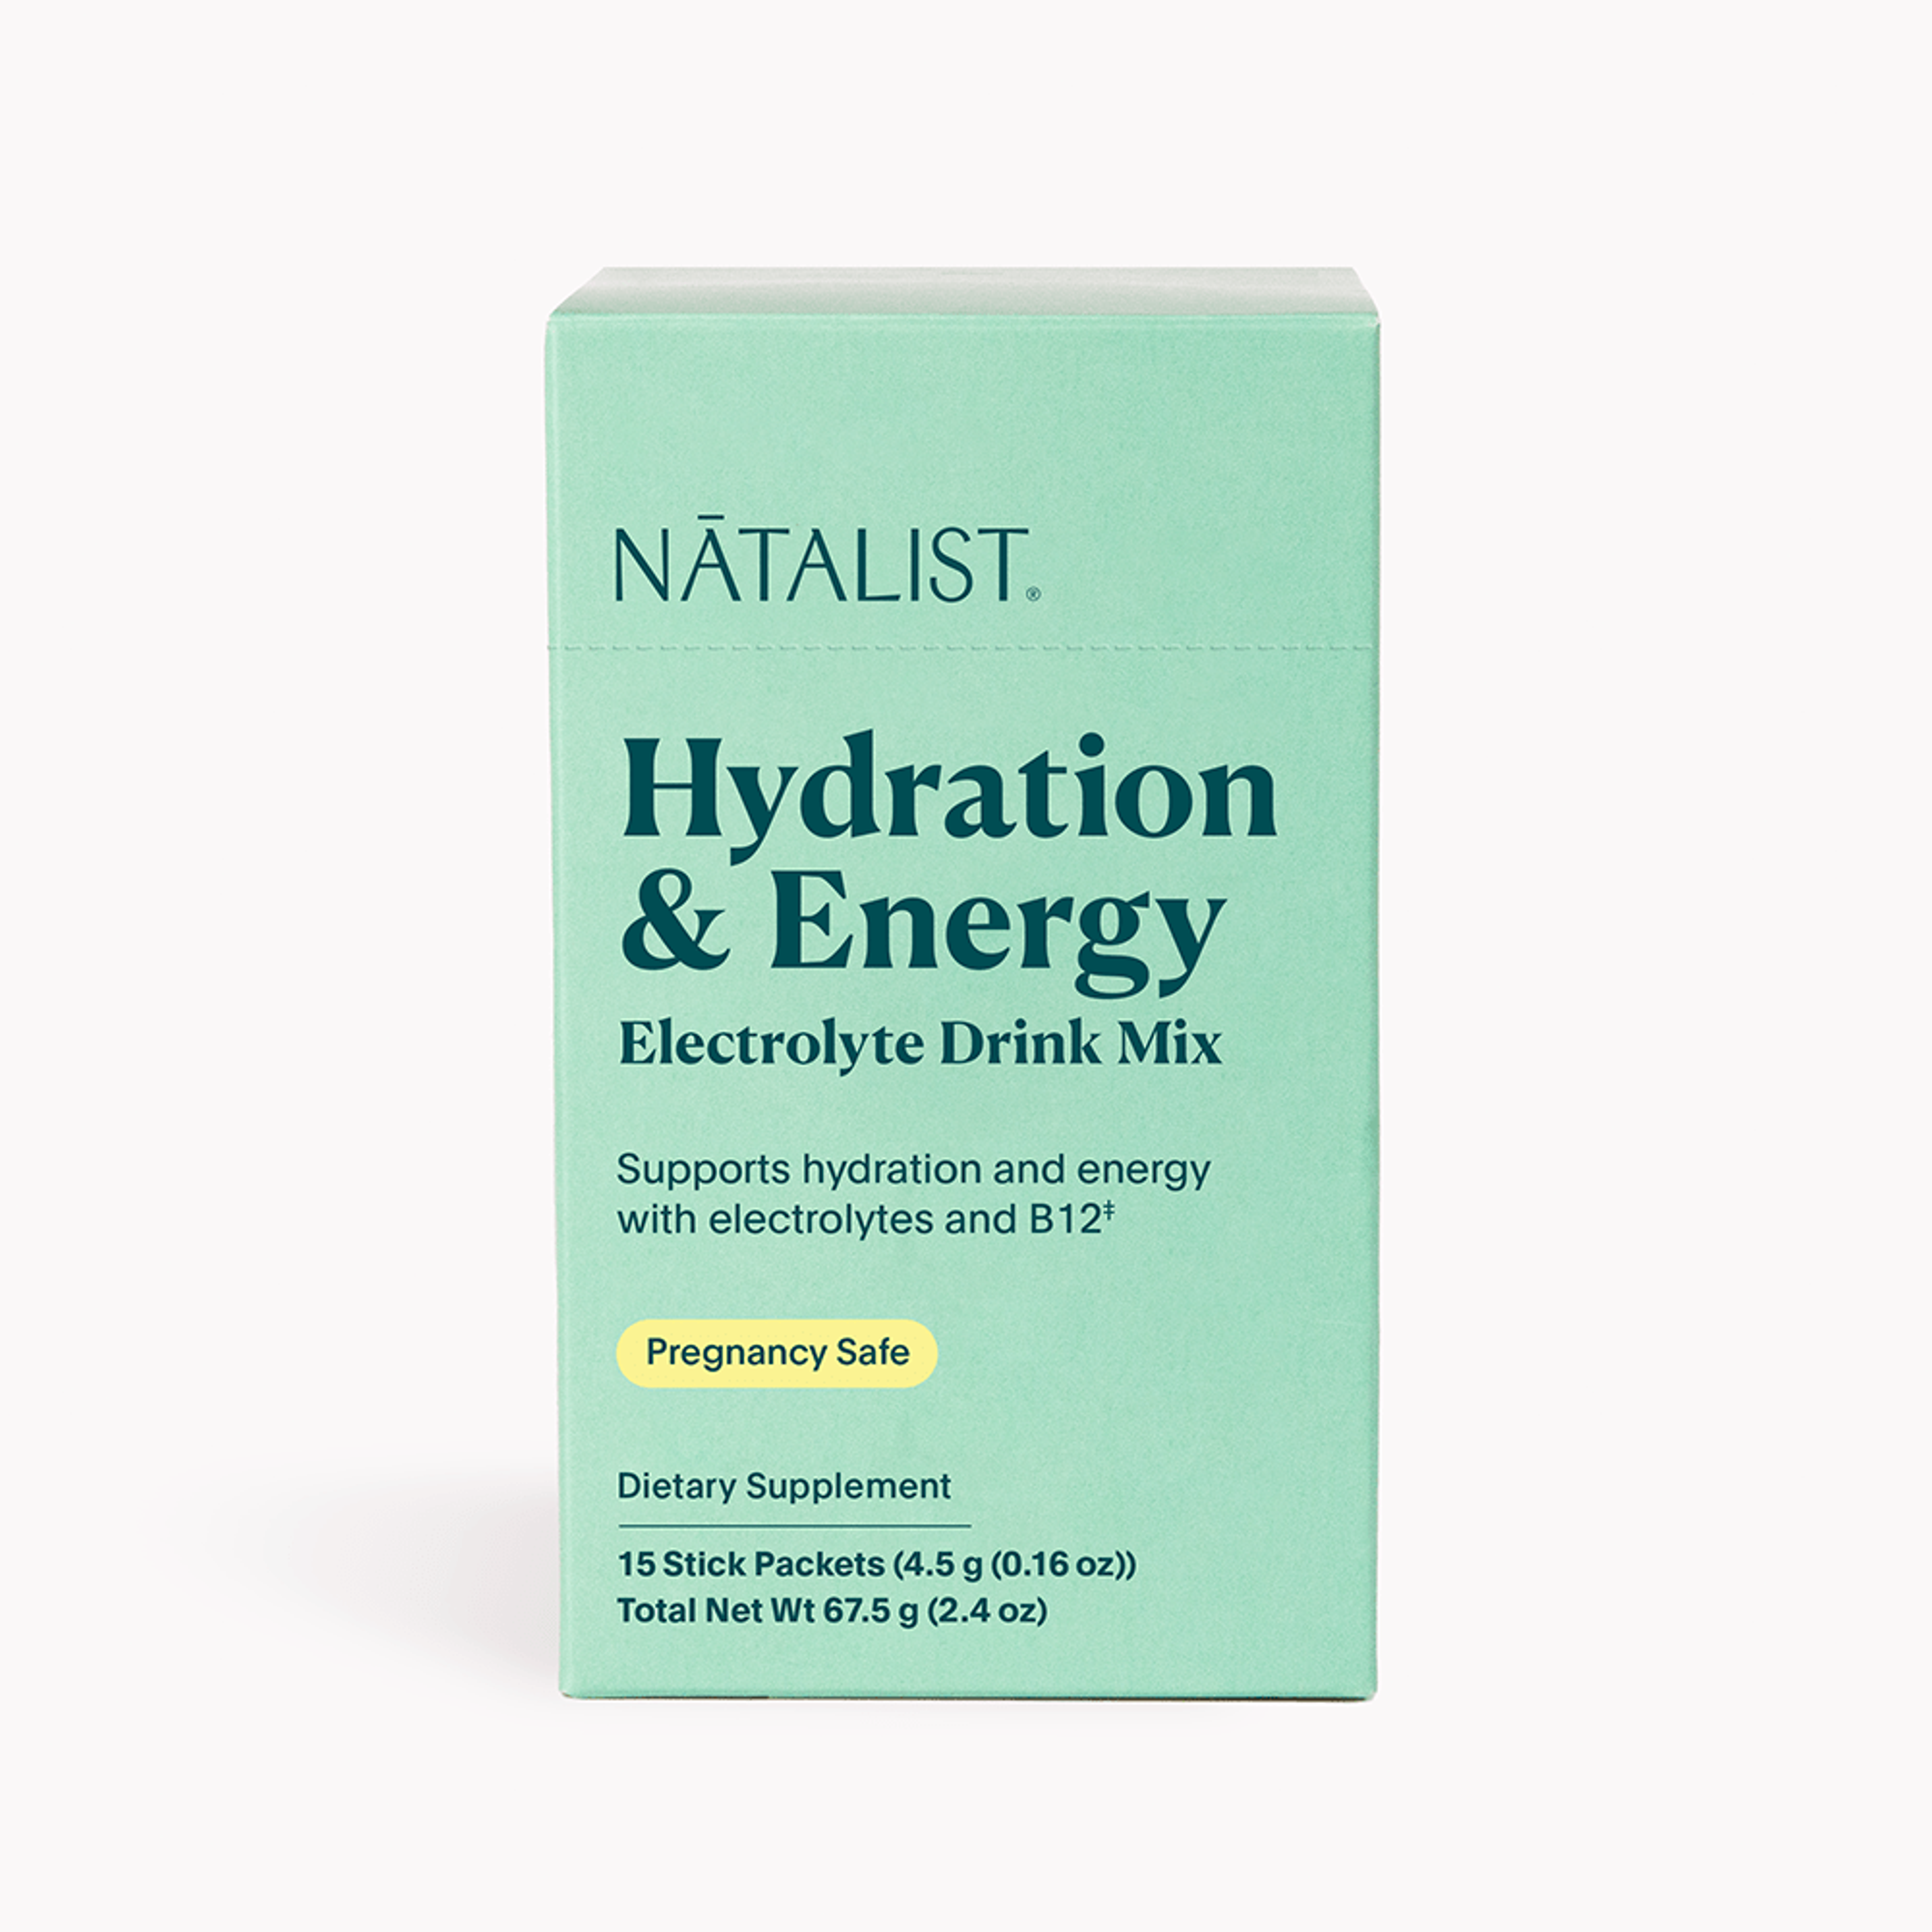 Hydration & Energy Electrolyte Drink Mix